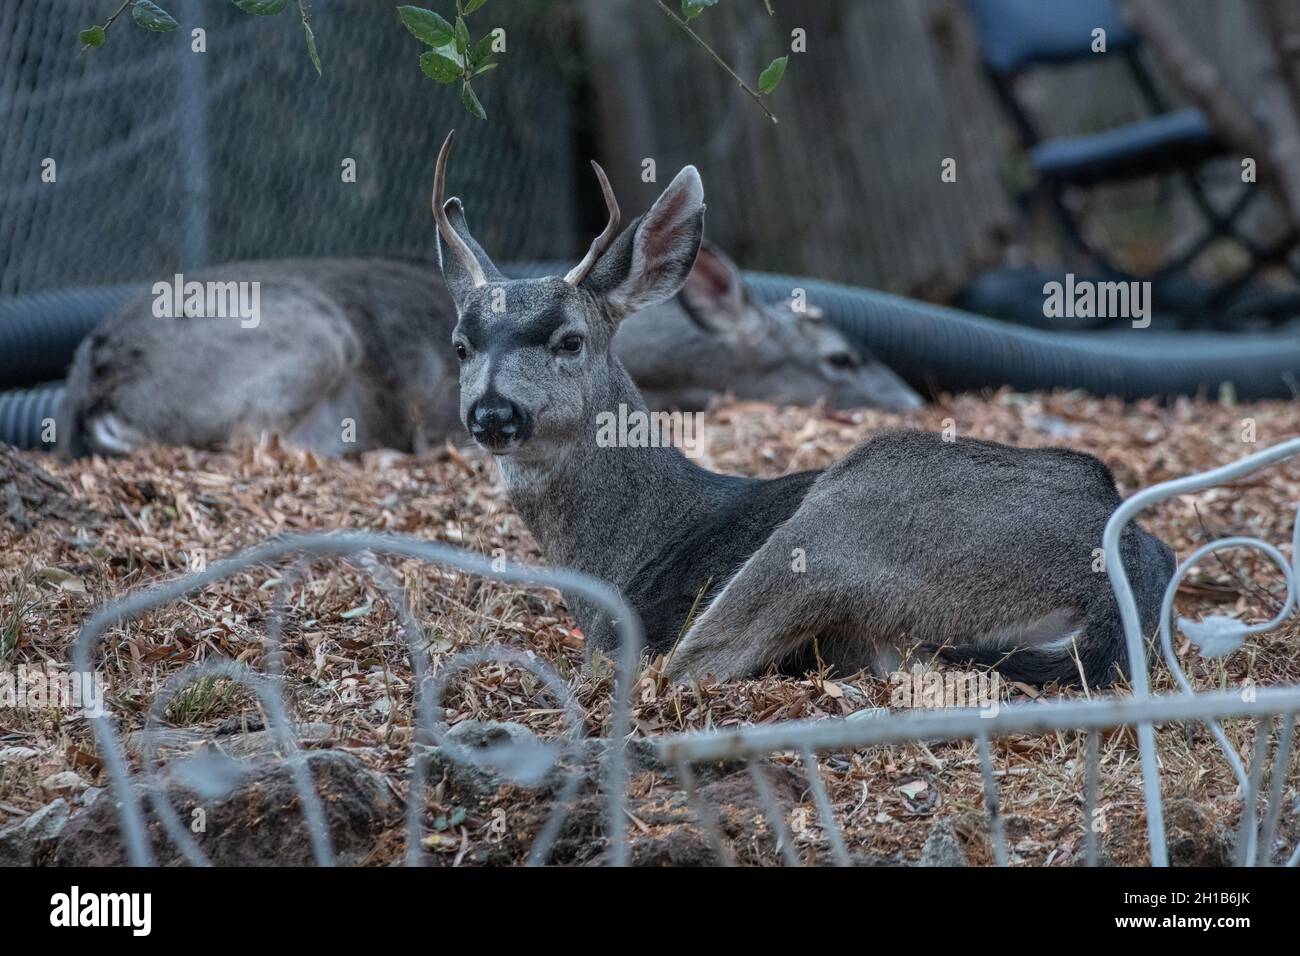 A pair of black tailed deer (Odocoileus hemionus columbianus) bed down in a yard in Berkeley, California.  Deer are frequent urban wildlife. Stock Photo